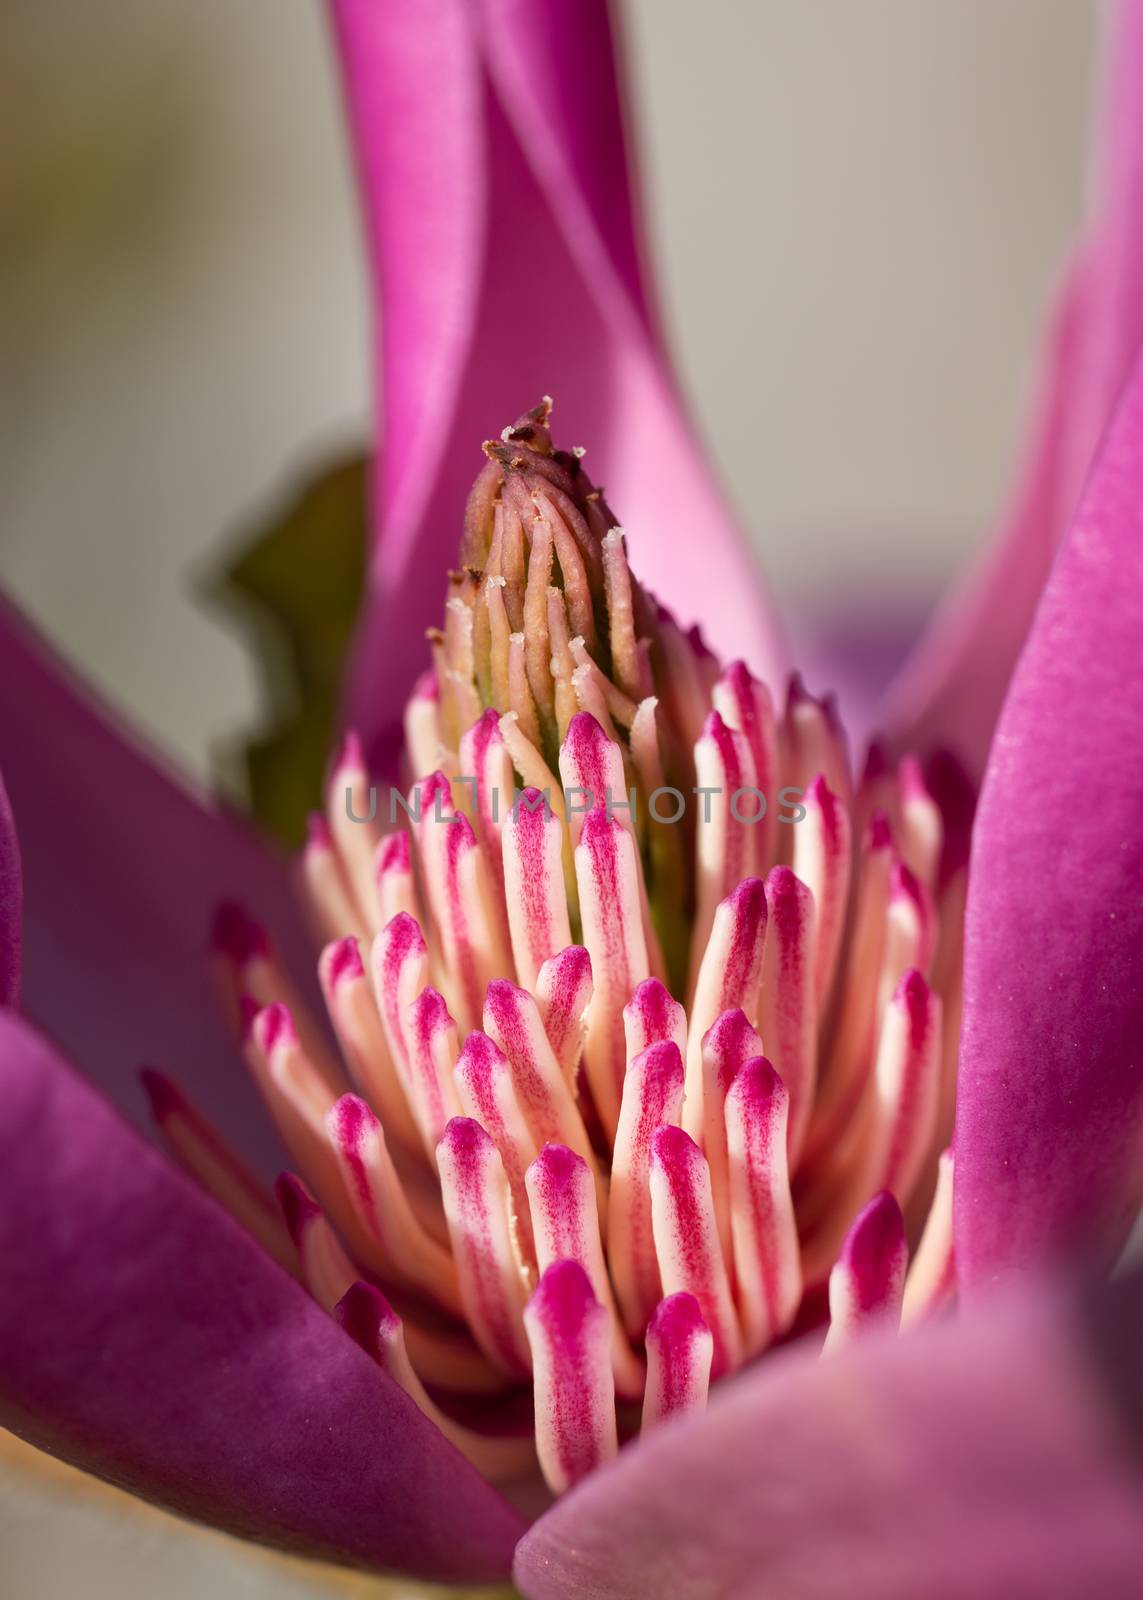 Tulip magnolia, Magnolia liliiflora by alfotokunst